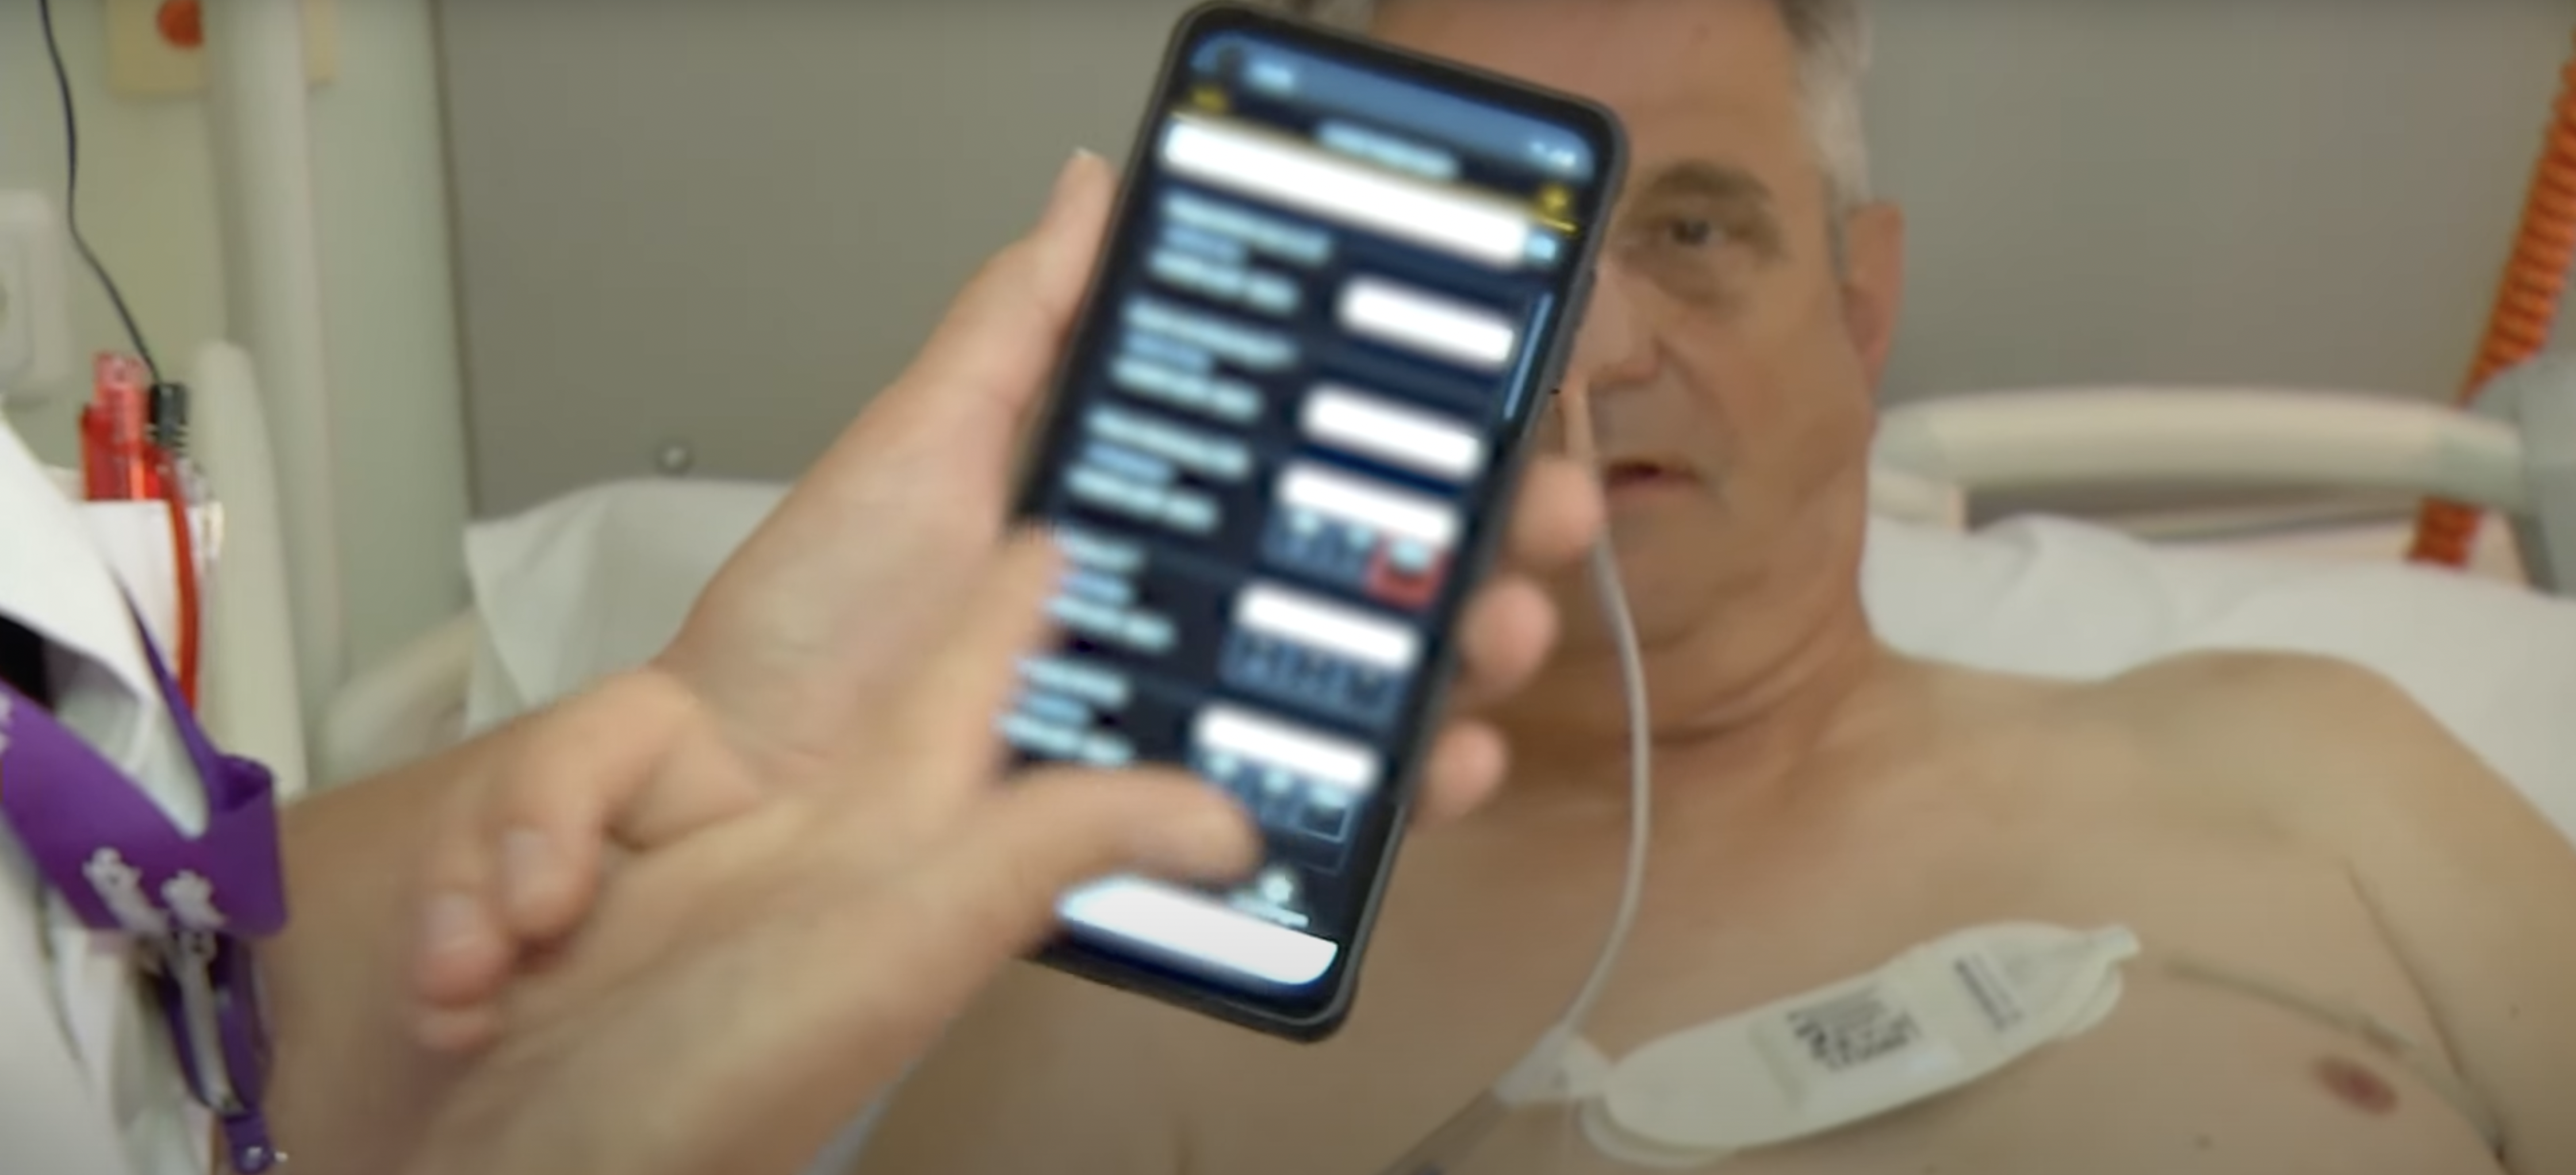 Albert Schweitzer Nurse shows Sensium app